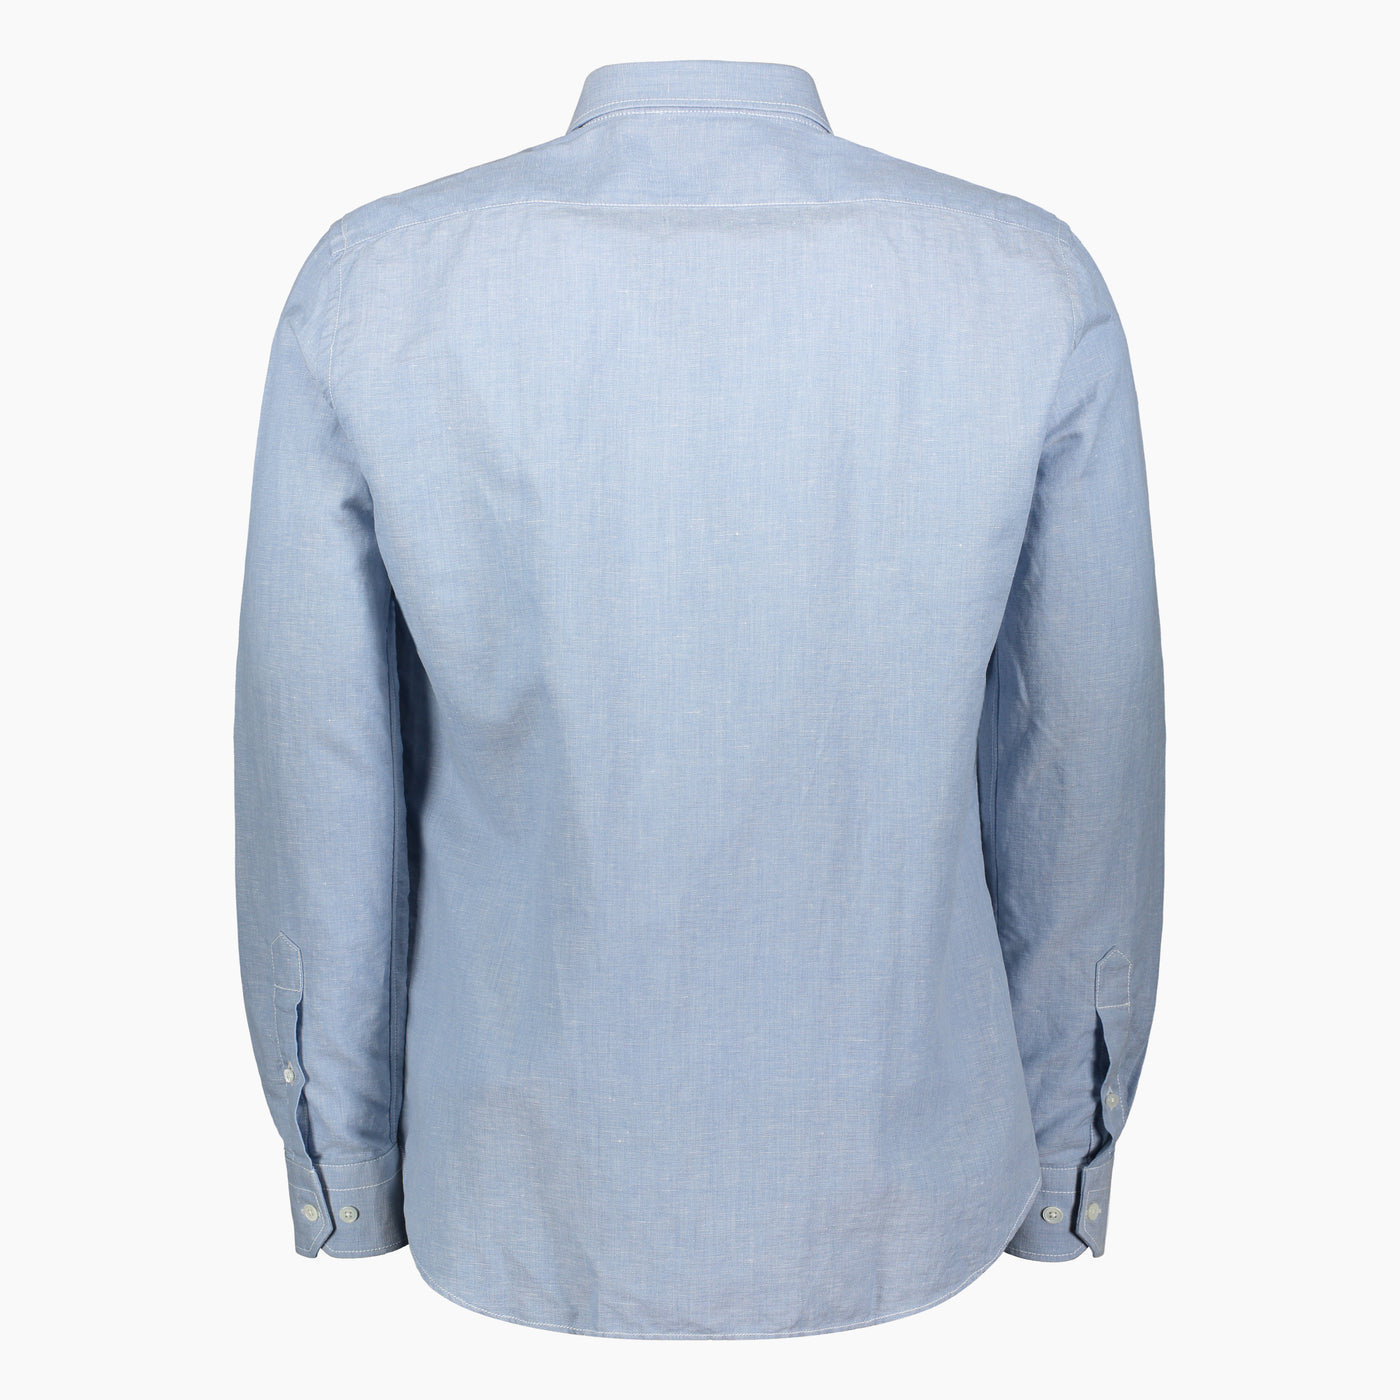 Clodoveu long-sleeved shirt in master oxford linen (sky blue)